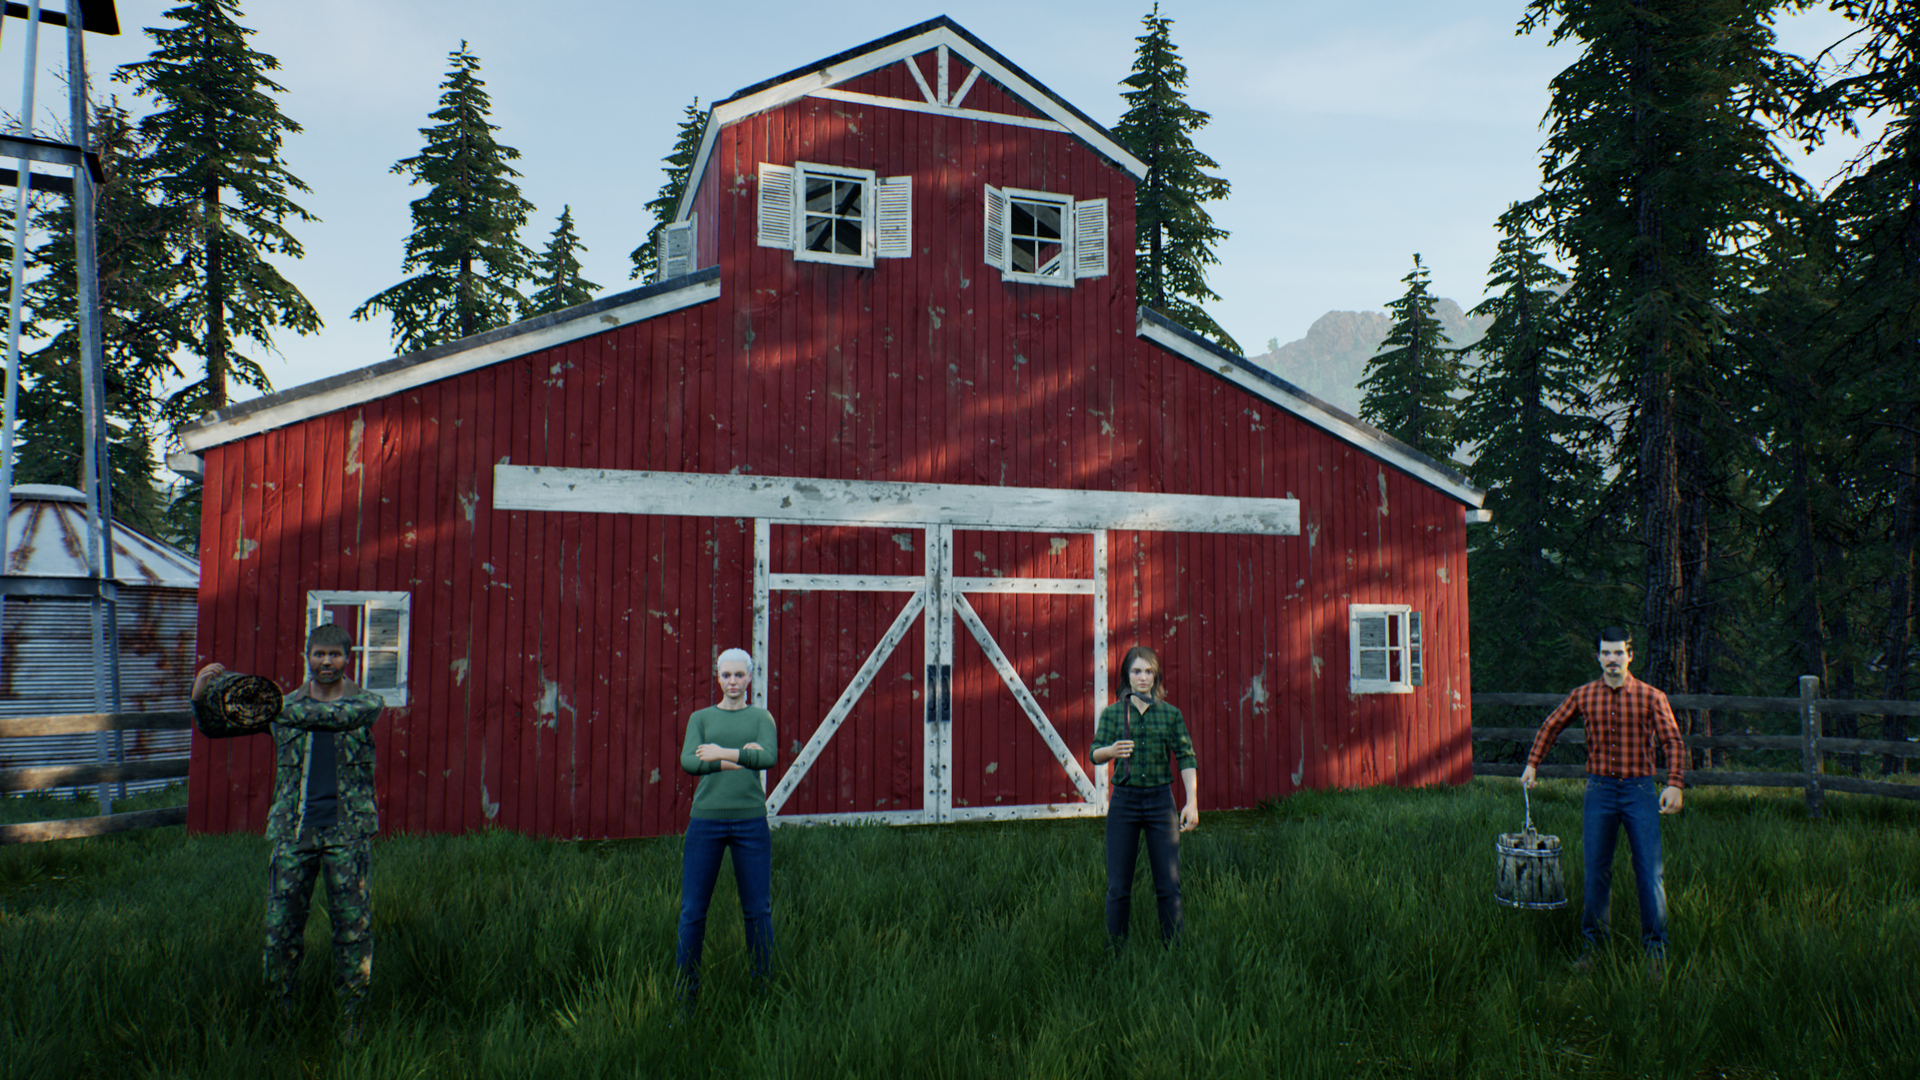 New Multiplayer Screenshots news - Ranch Simulator - IndieDB